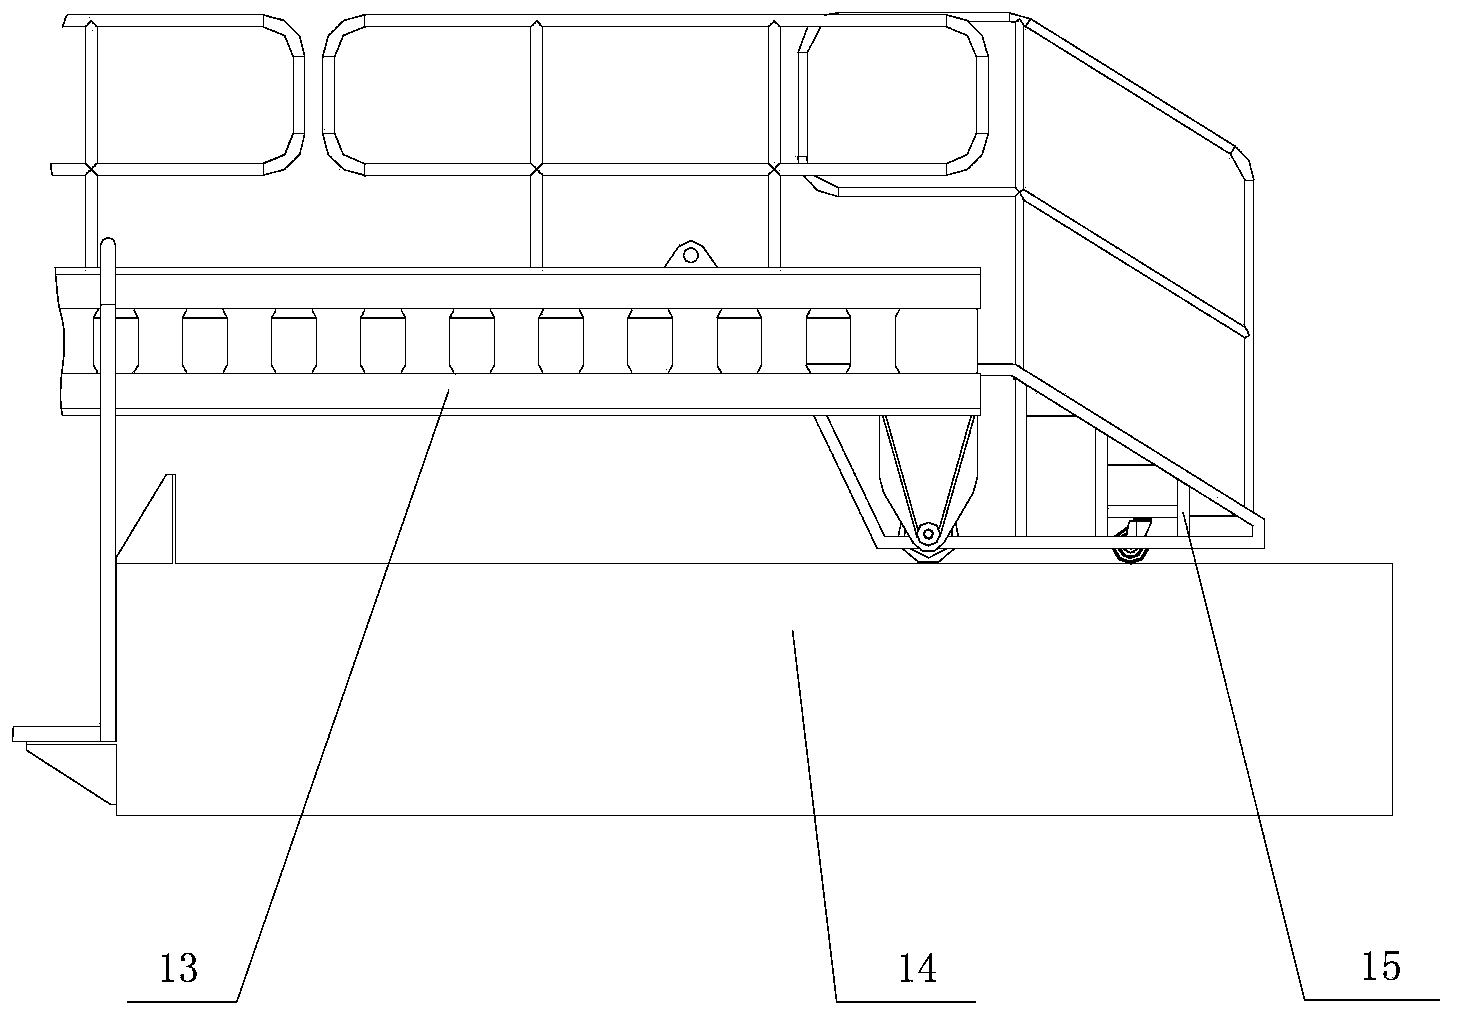 Deck ladder for follow-up horizontal ship